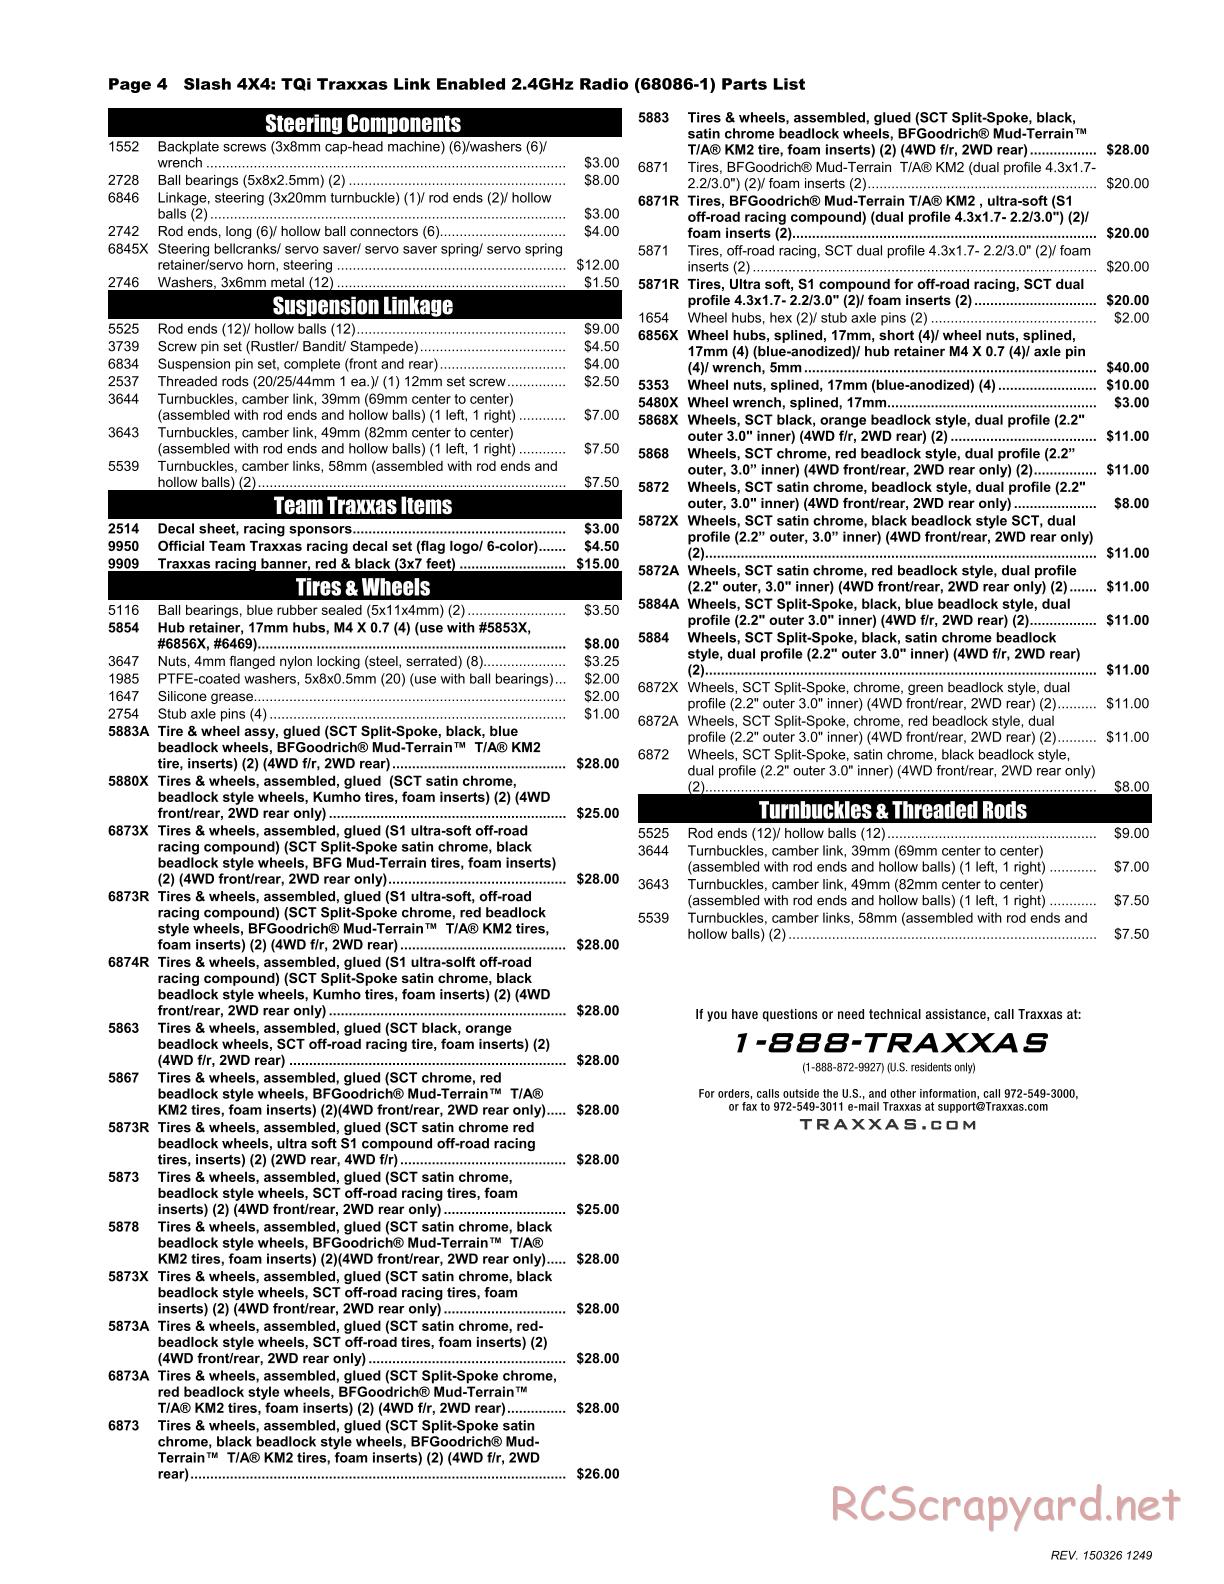 Traxxas - Slash 4x4 (2015) - Parts List - Page 4